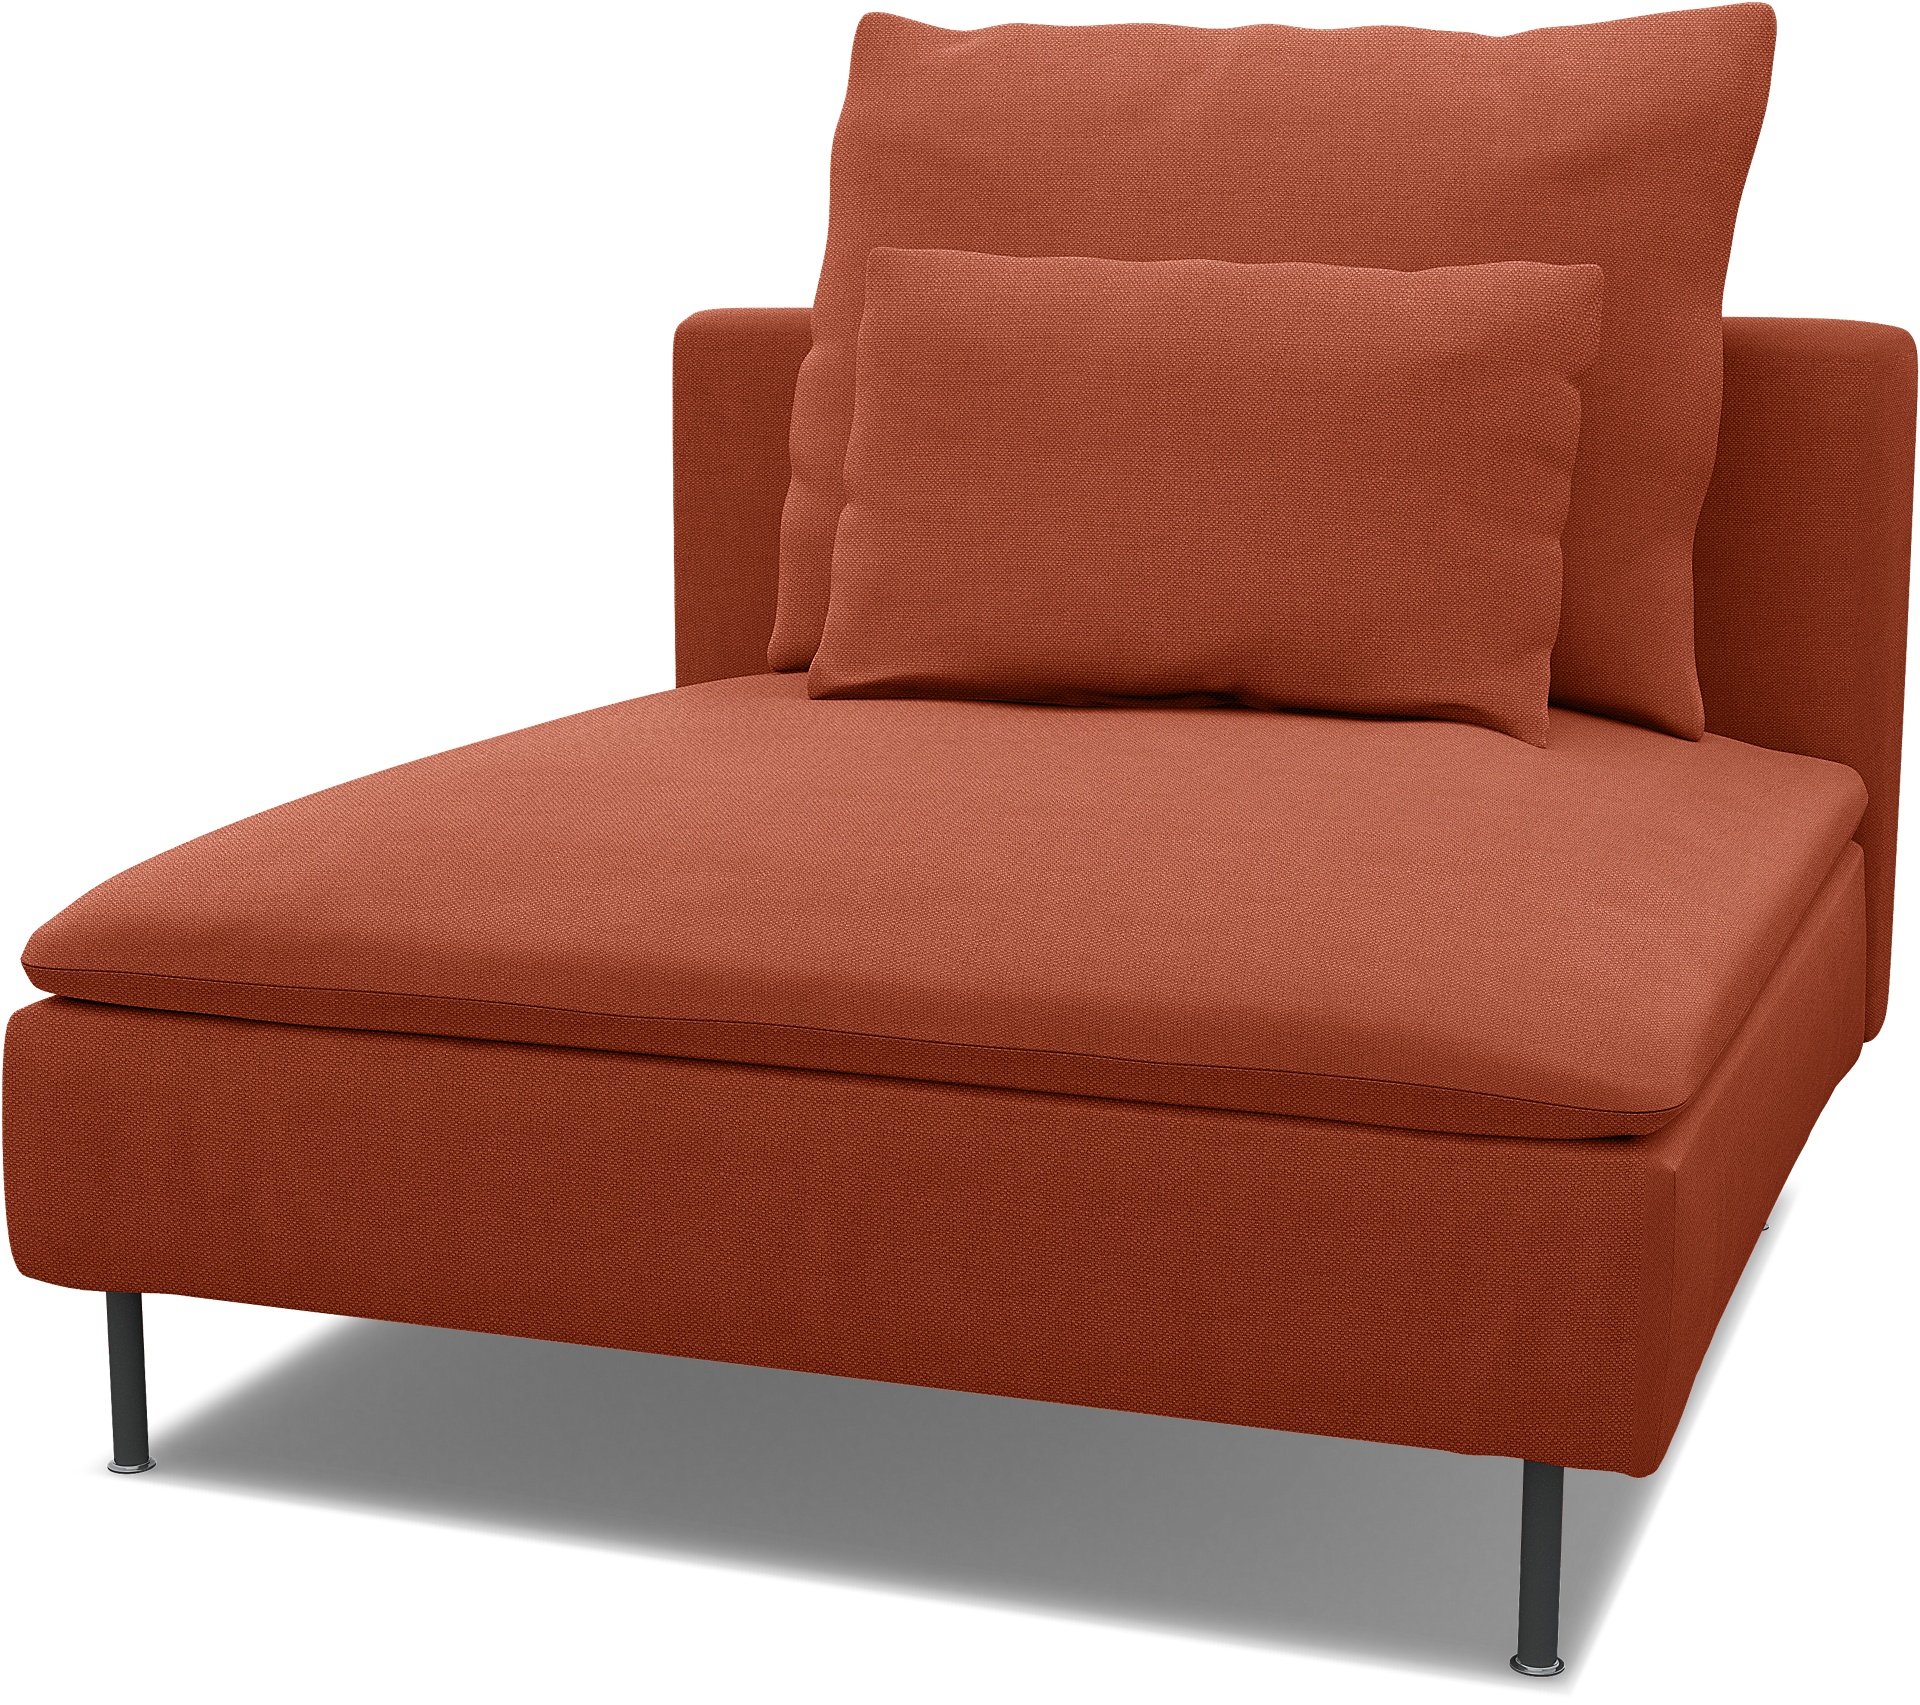 Spare seat cushion cover for SODERHAMN 1 SEAT SECTION , Burnt Orange, Linen - Bemz